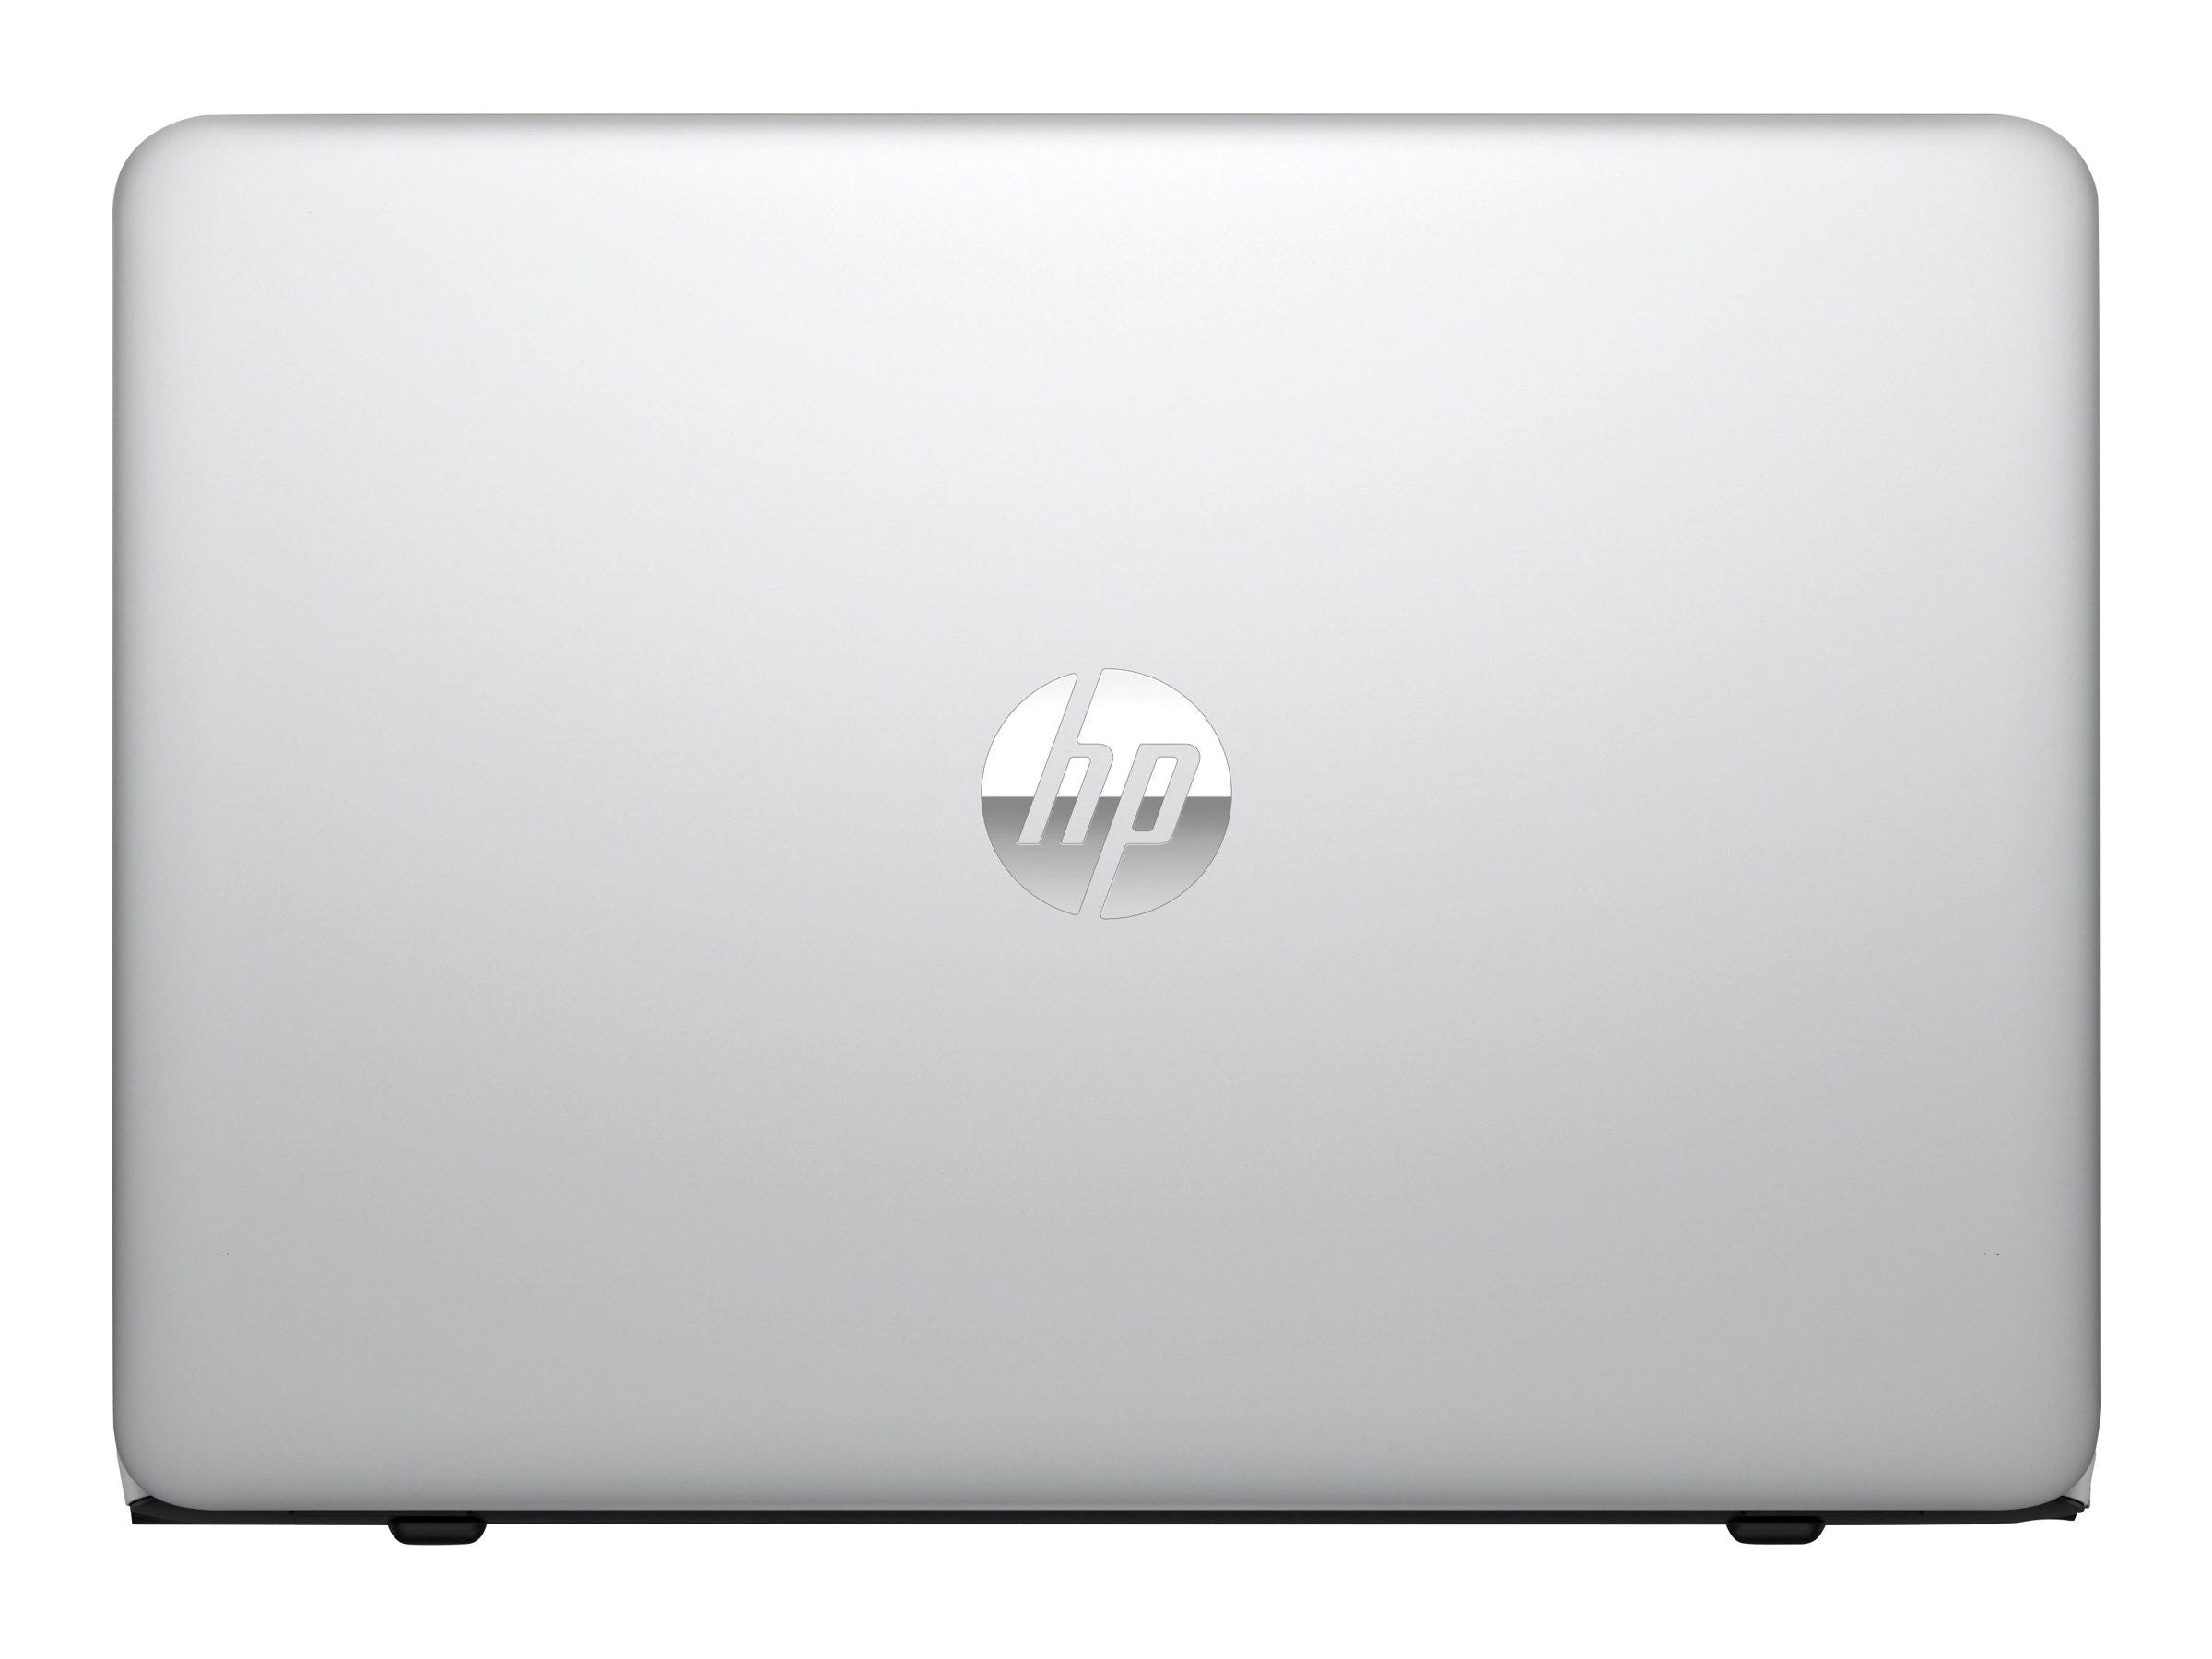 HP EliteBook 840 G3 Touchscreen Refurbished Laptop 14